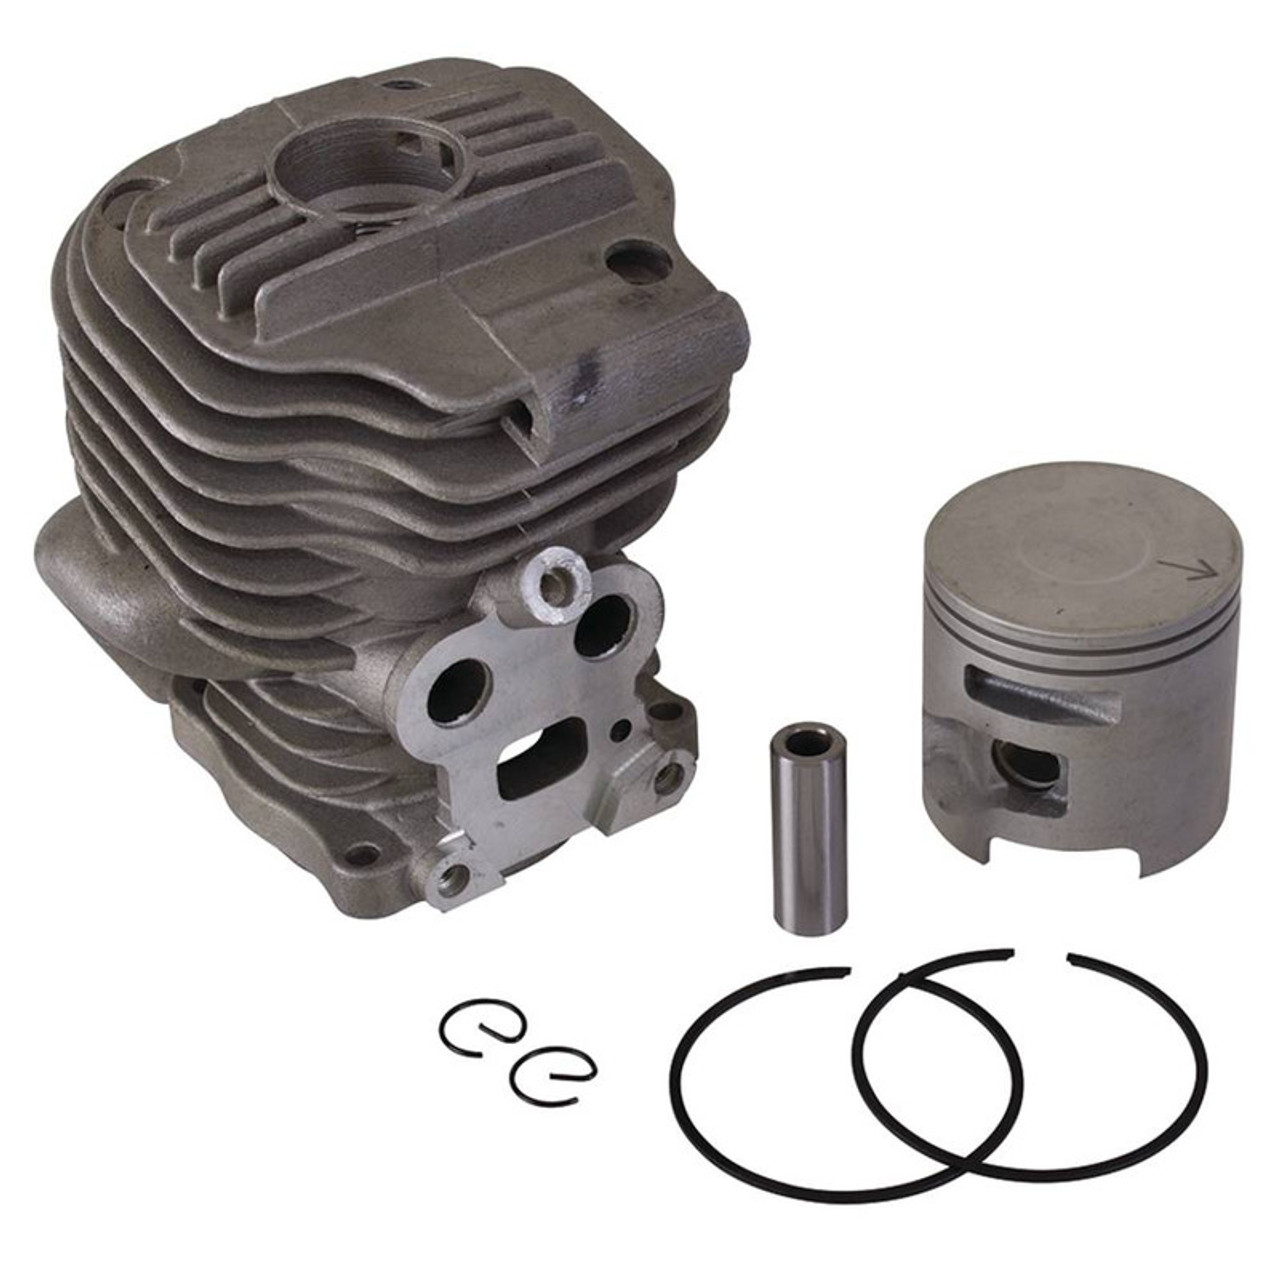 Engine Rebuild Kit for Husqvarna K750, K760 Cut Off Saw 506386171, 520757304, 581476101, 581476102 (before February 2013) Cylinder Piston Rings